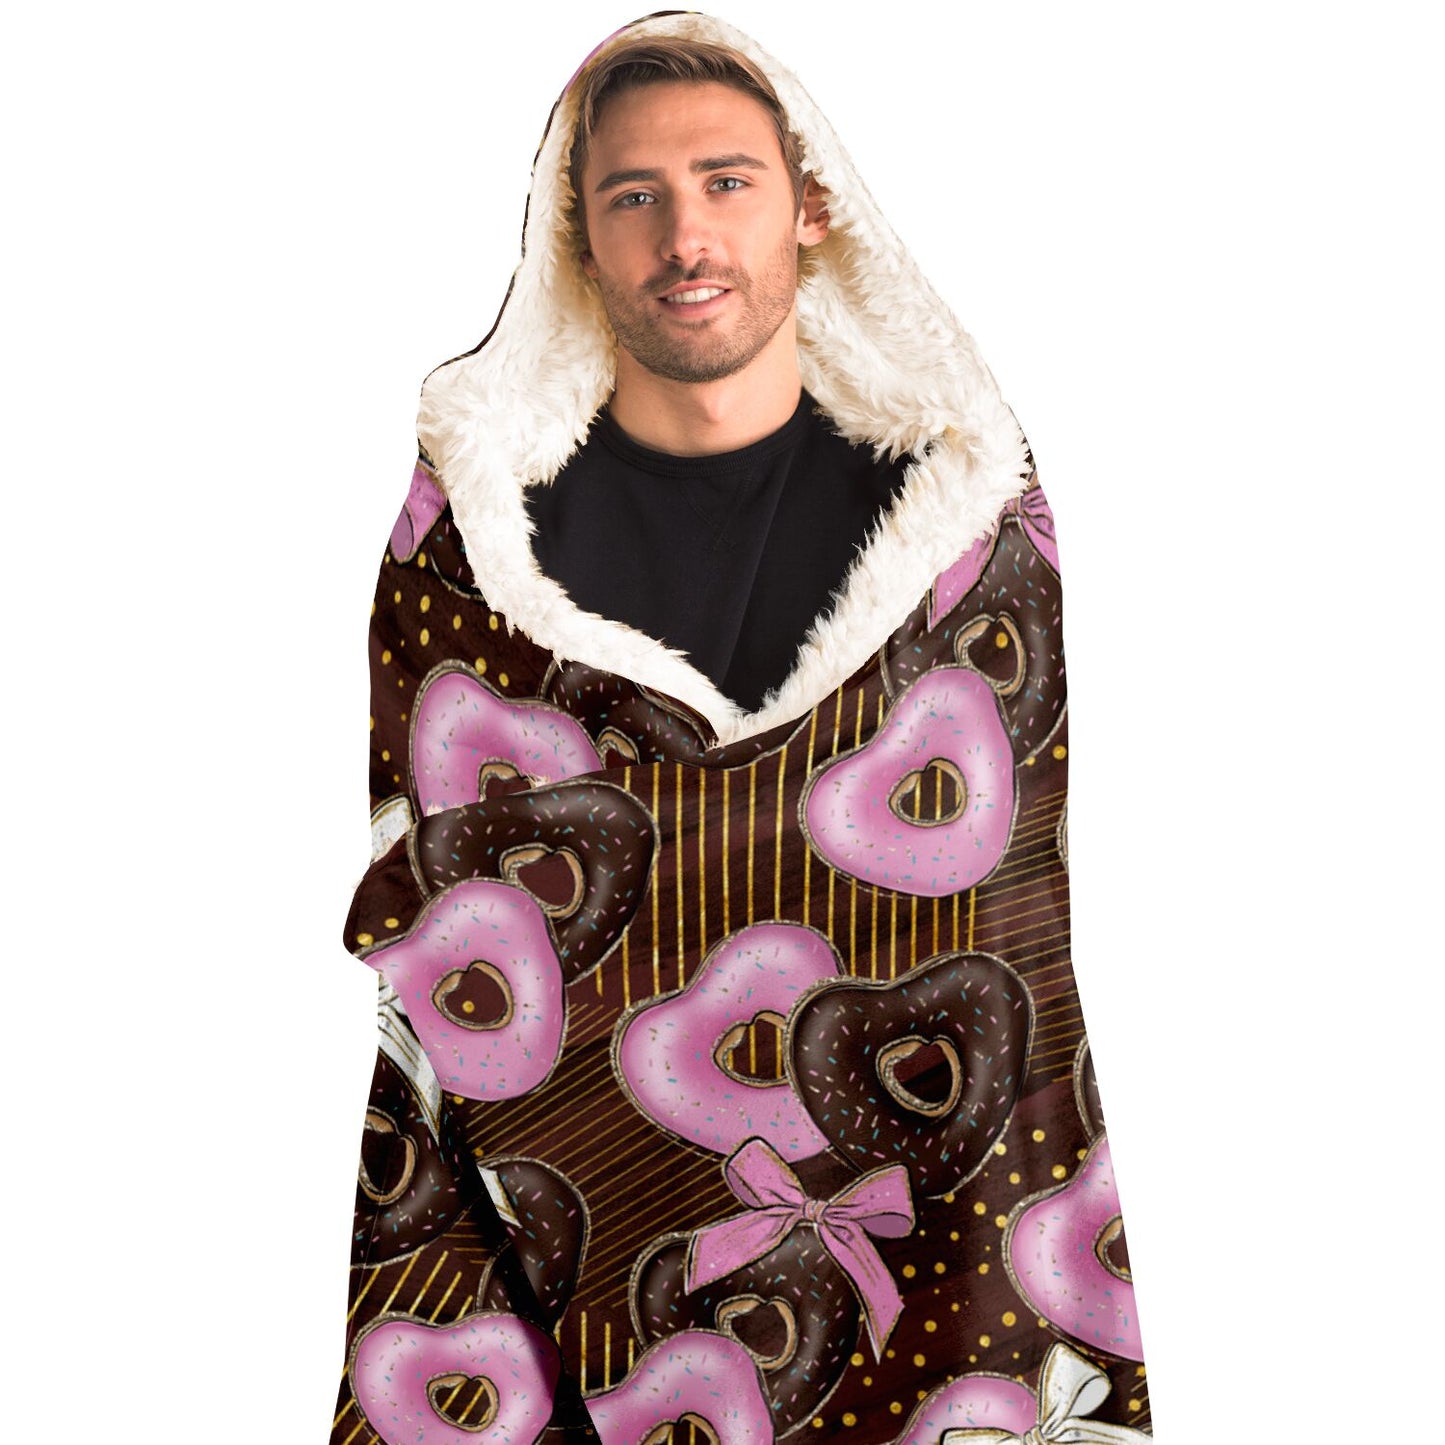 Kozy Komfort Hooded Heart Donuts Blanket